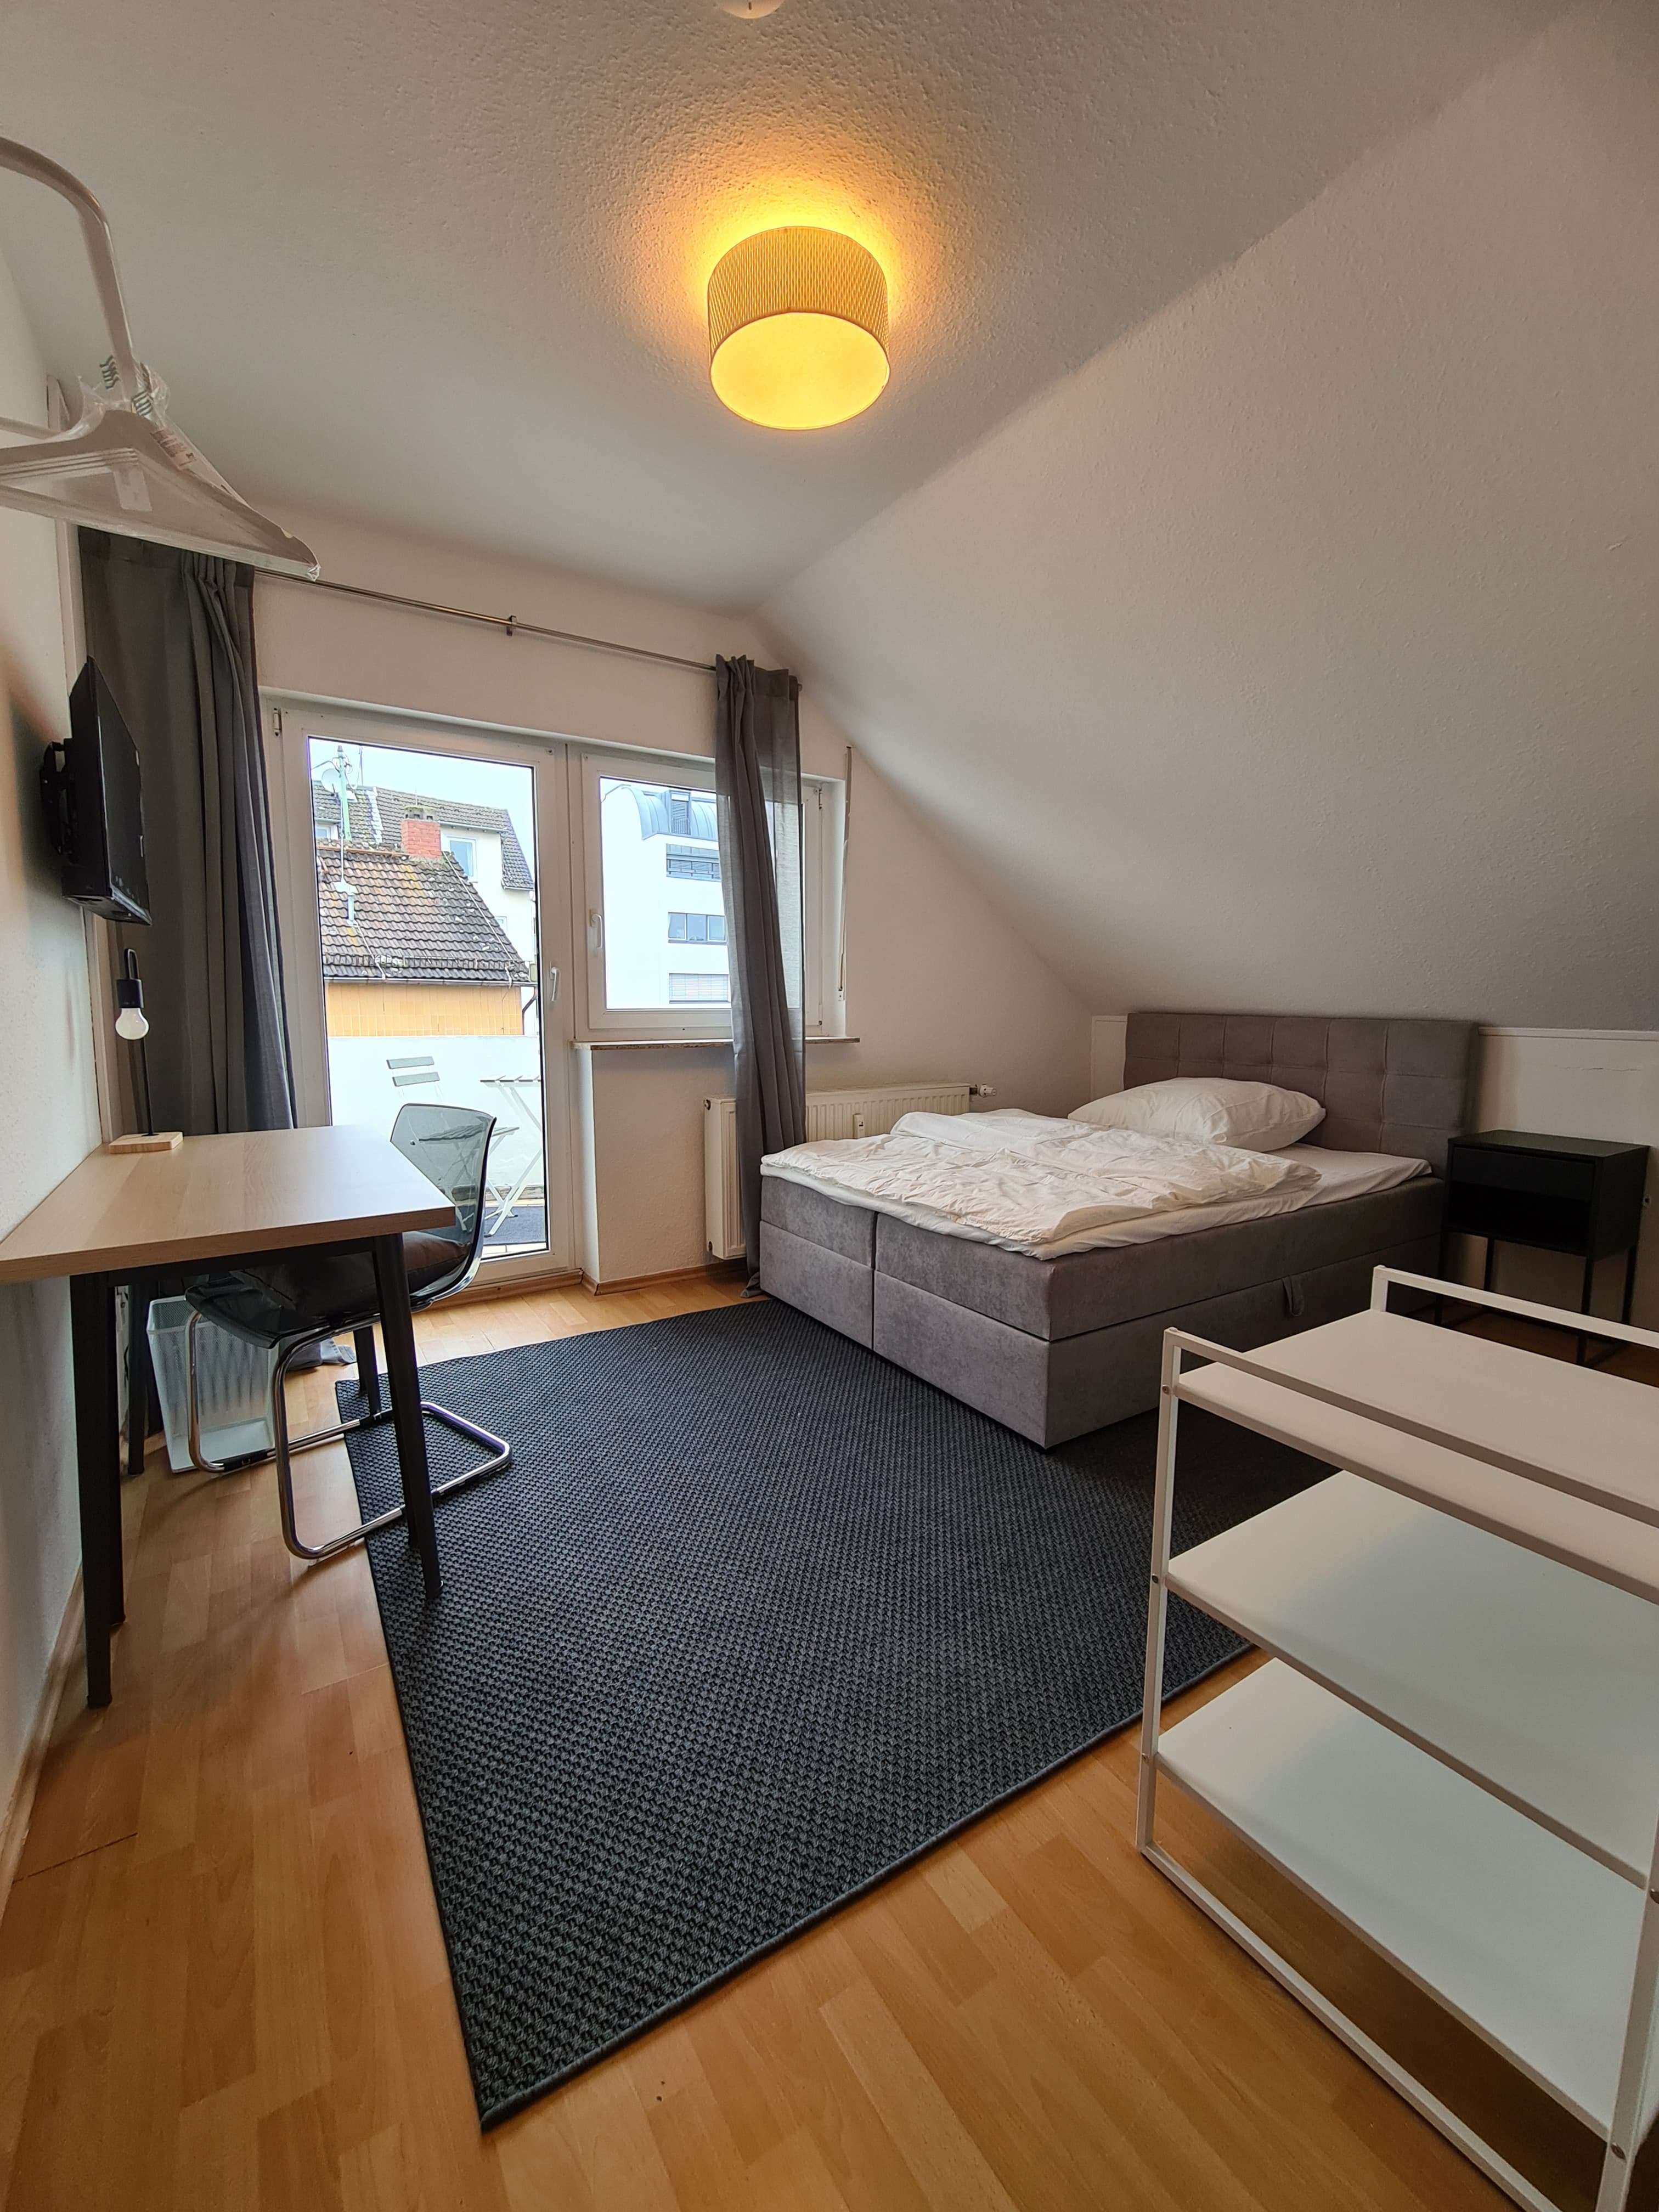 Wohnung zum Mieten in Frankfurt am Main (Rödelheim) 600,00 € 20 m²